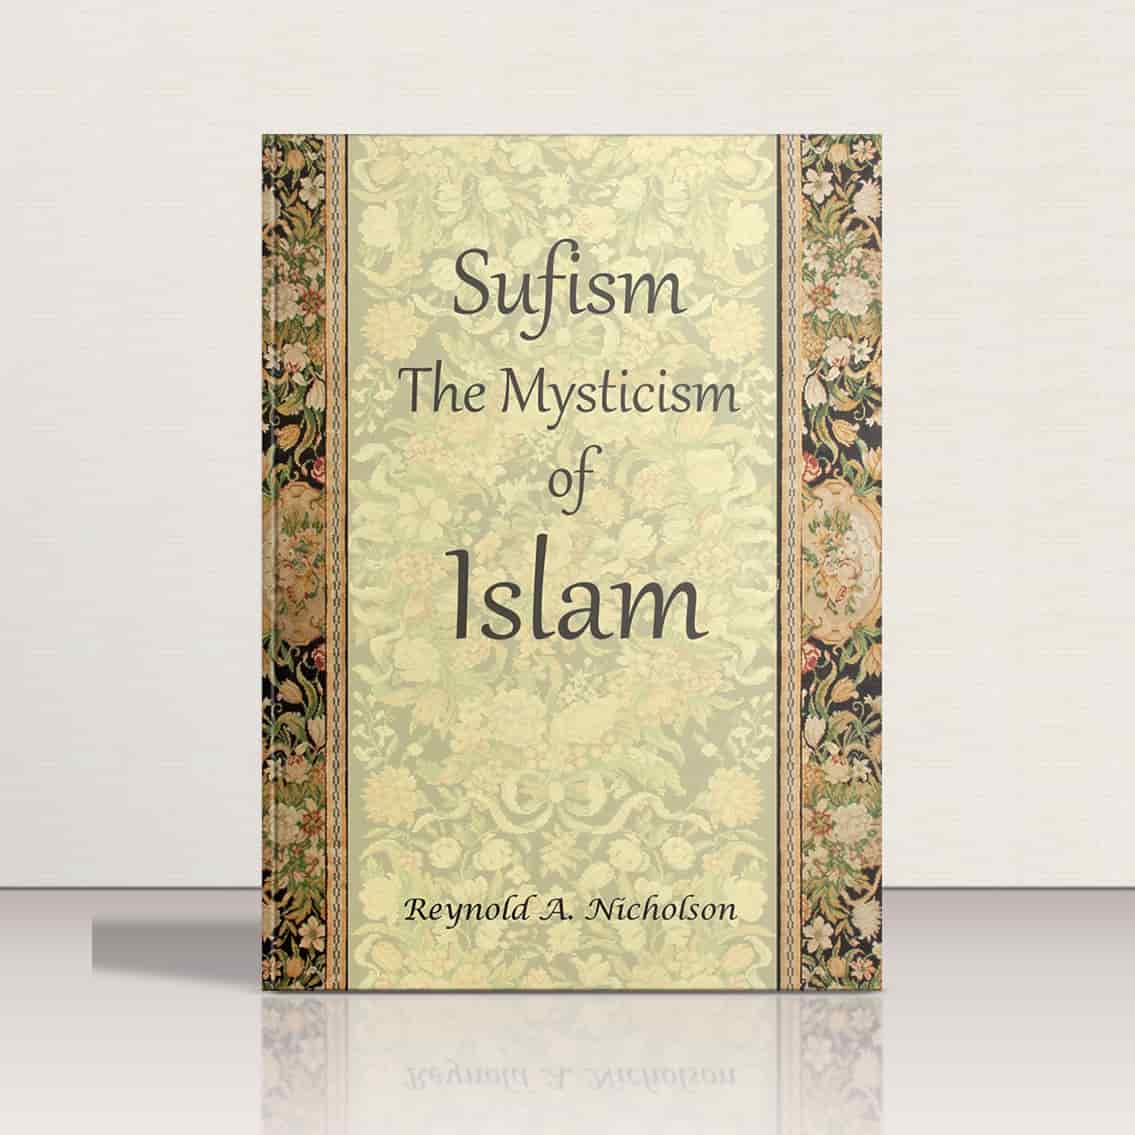 Sufism-The Mysticism of Islam by Reynold A Nicholson